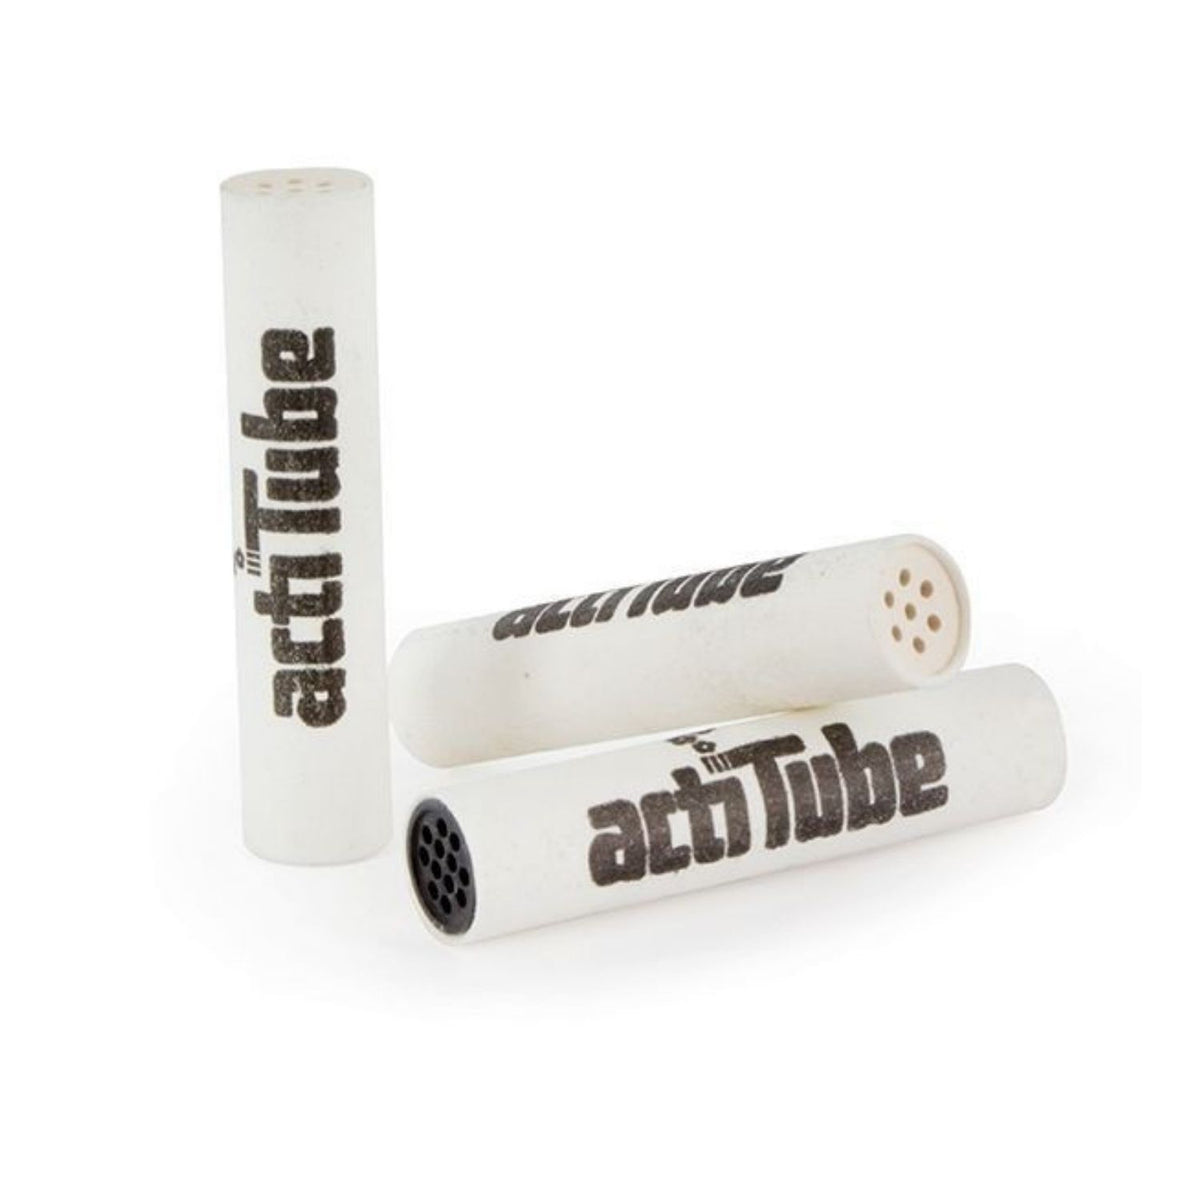 ActiTube EXTRA SLIM Carbon filters 6mm 50pcs - Flowrolls